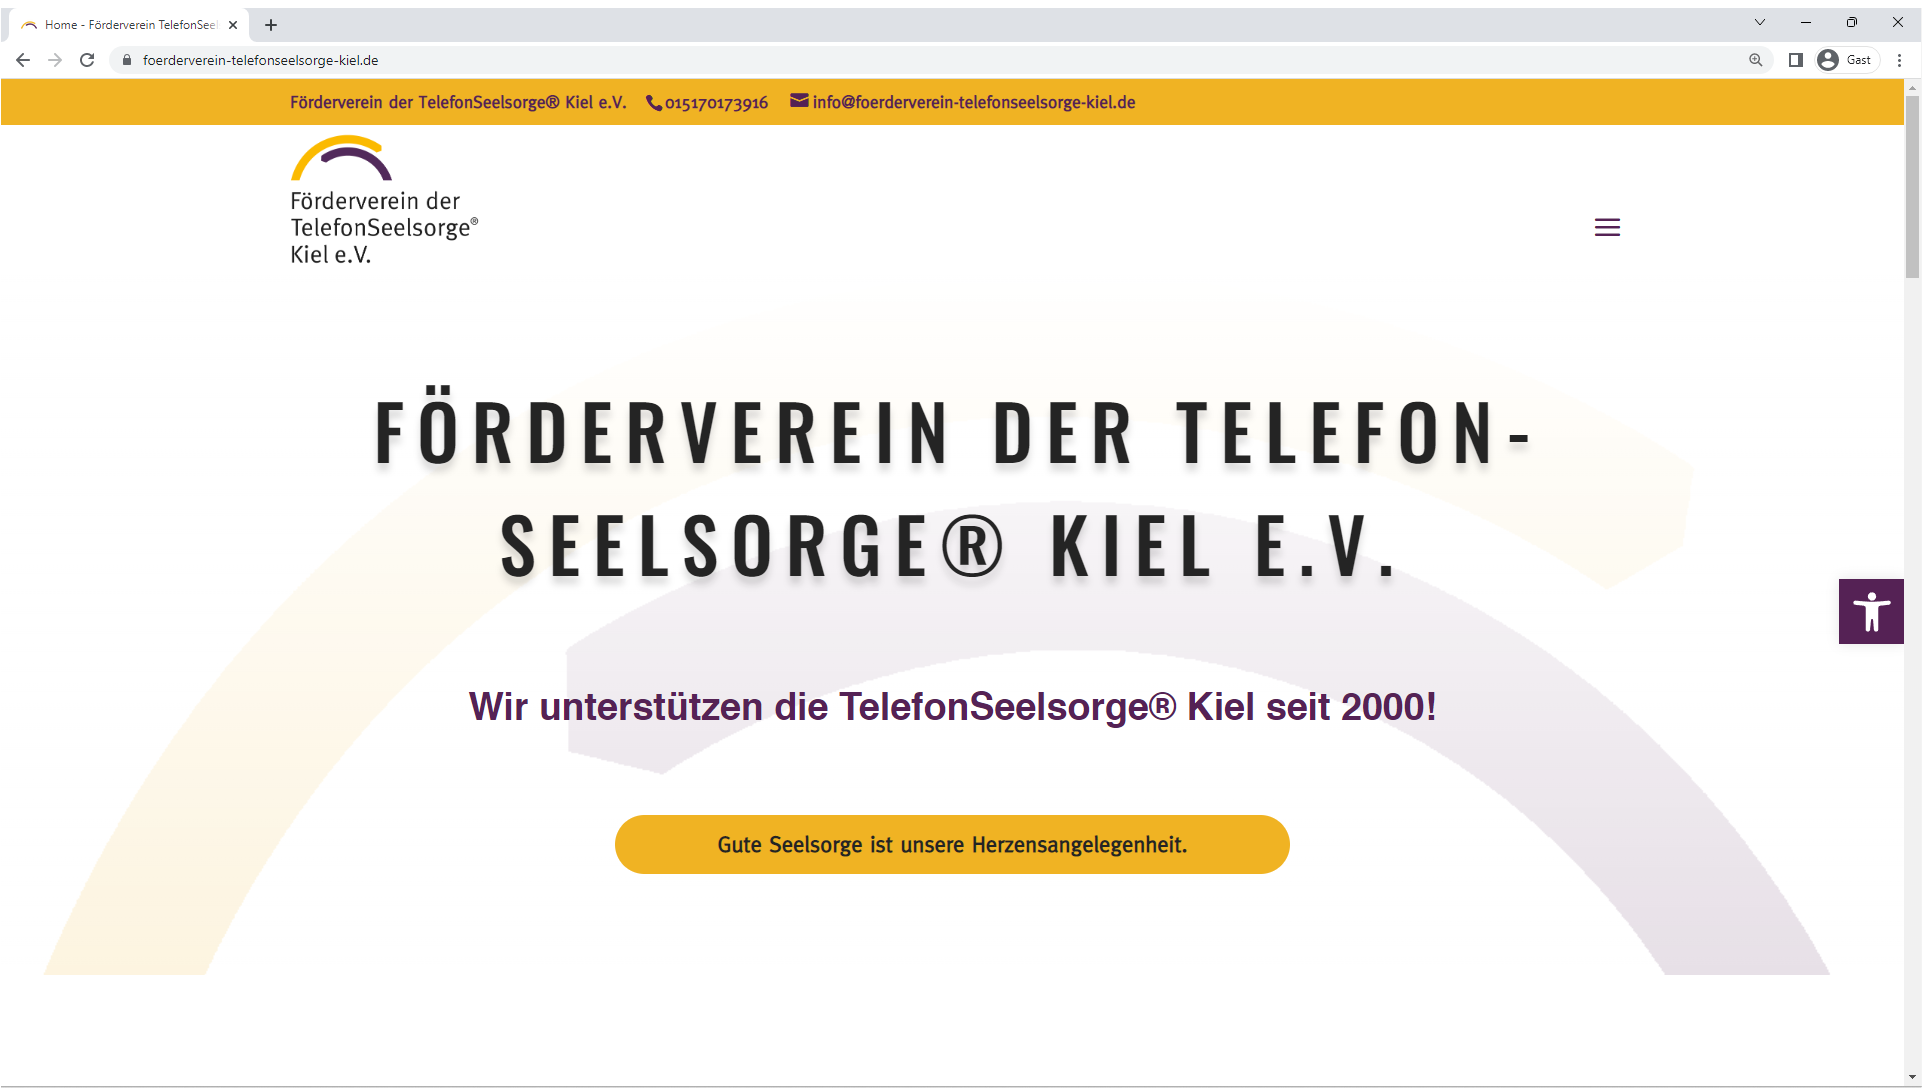 (c) Foerderverein-telefonseelsorge-kiel.de